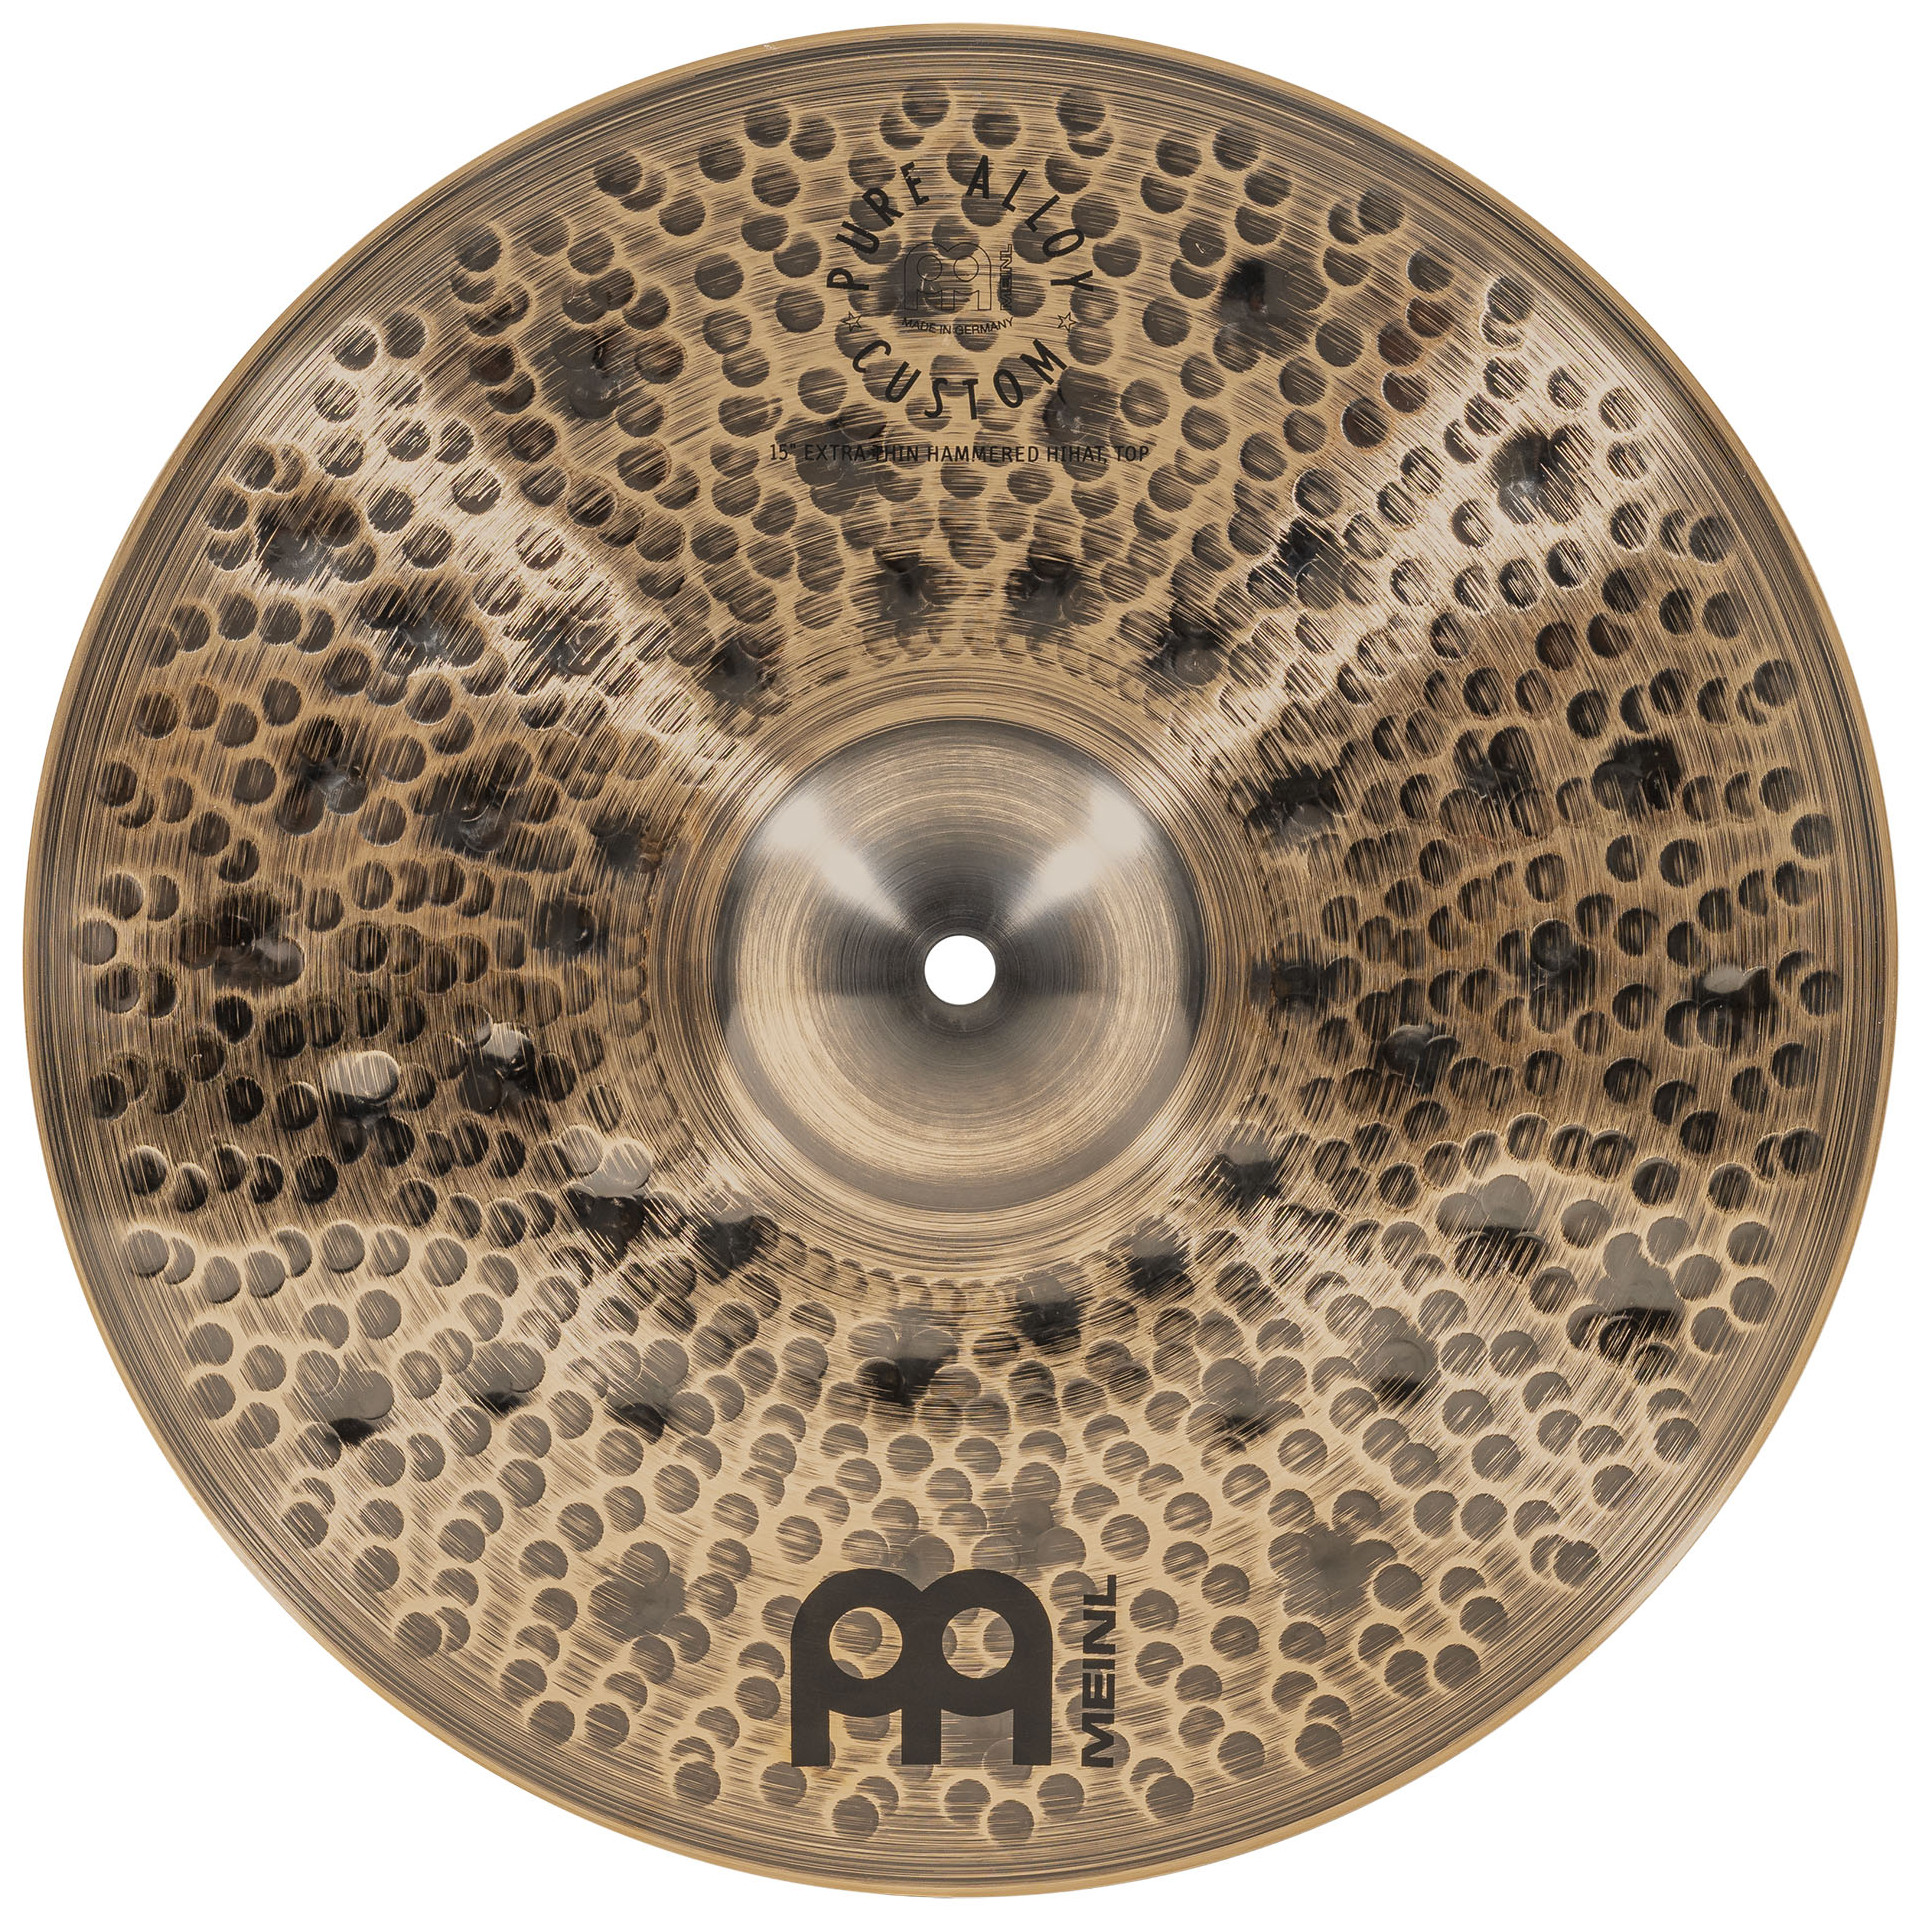 Meinl Cymbals PAC15ETH - 15" Pure Alloy Custom Extra Thin Hammer  HiHat 4